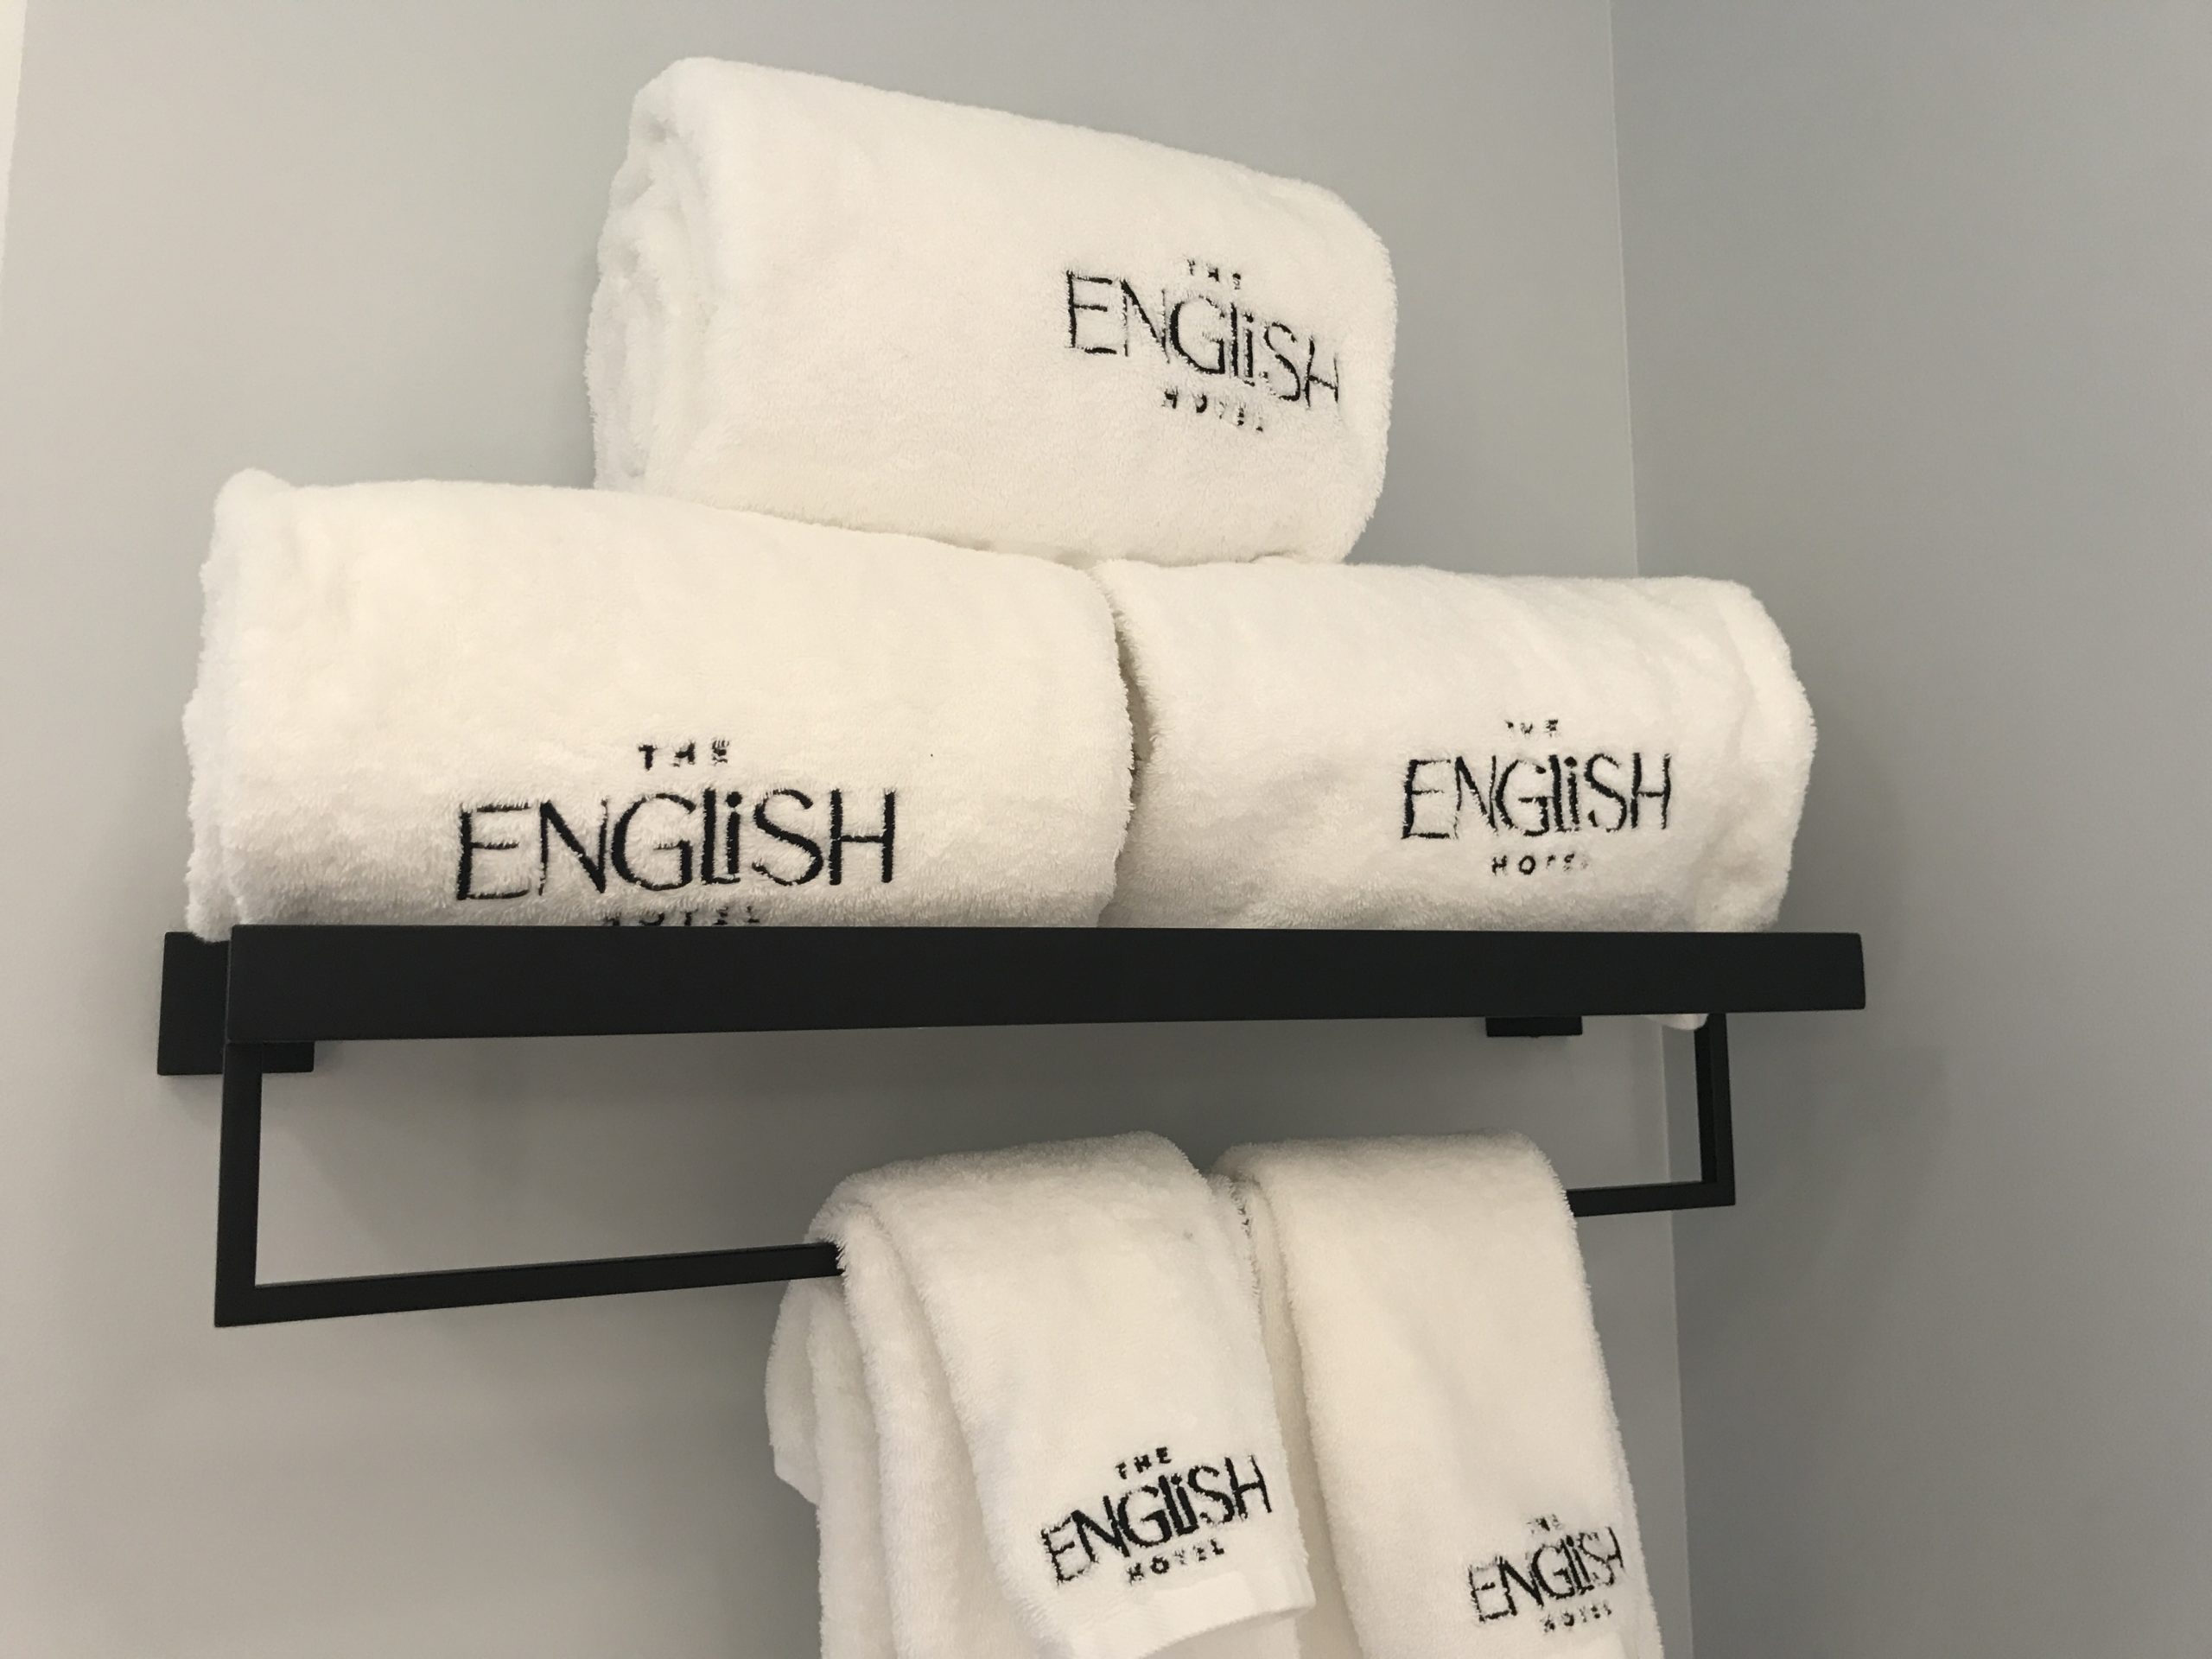 English hotel las vegas towels